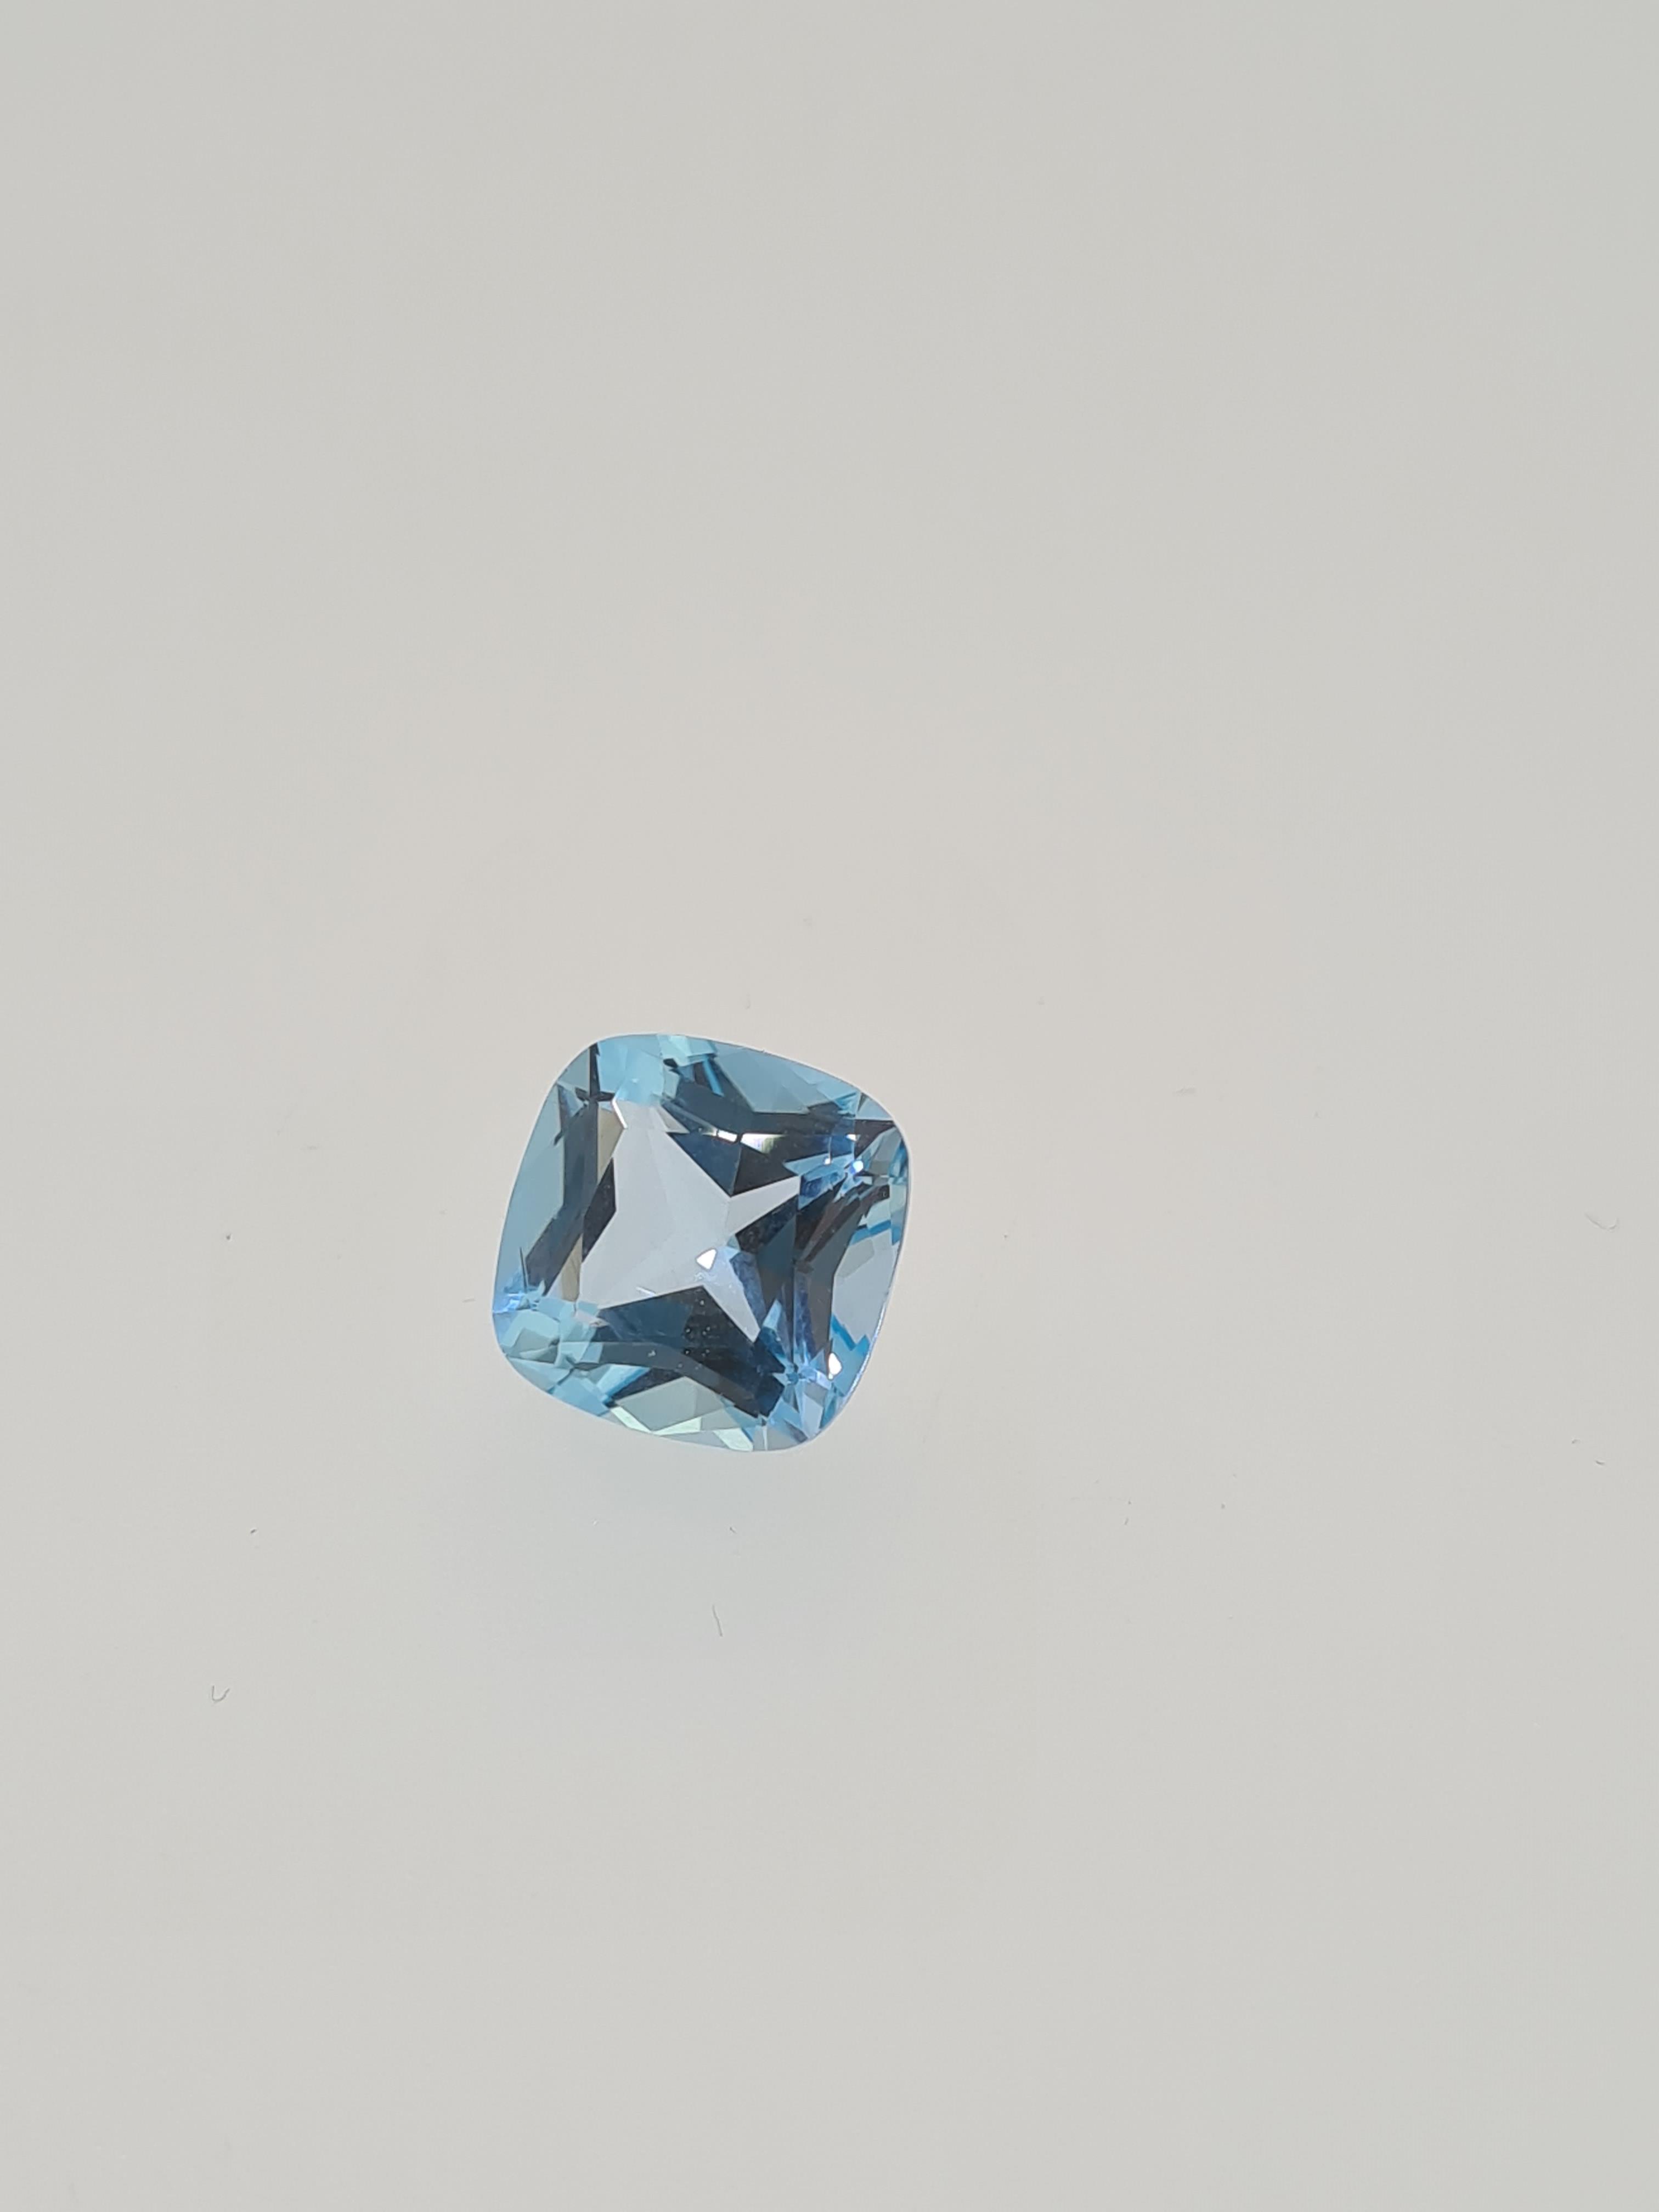 Blue topaz cushion cut gem stone - Image 3 of 3